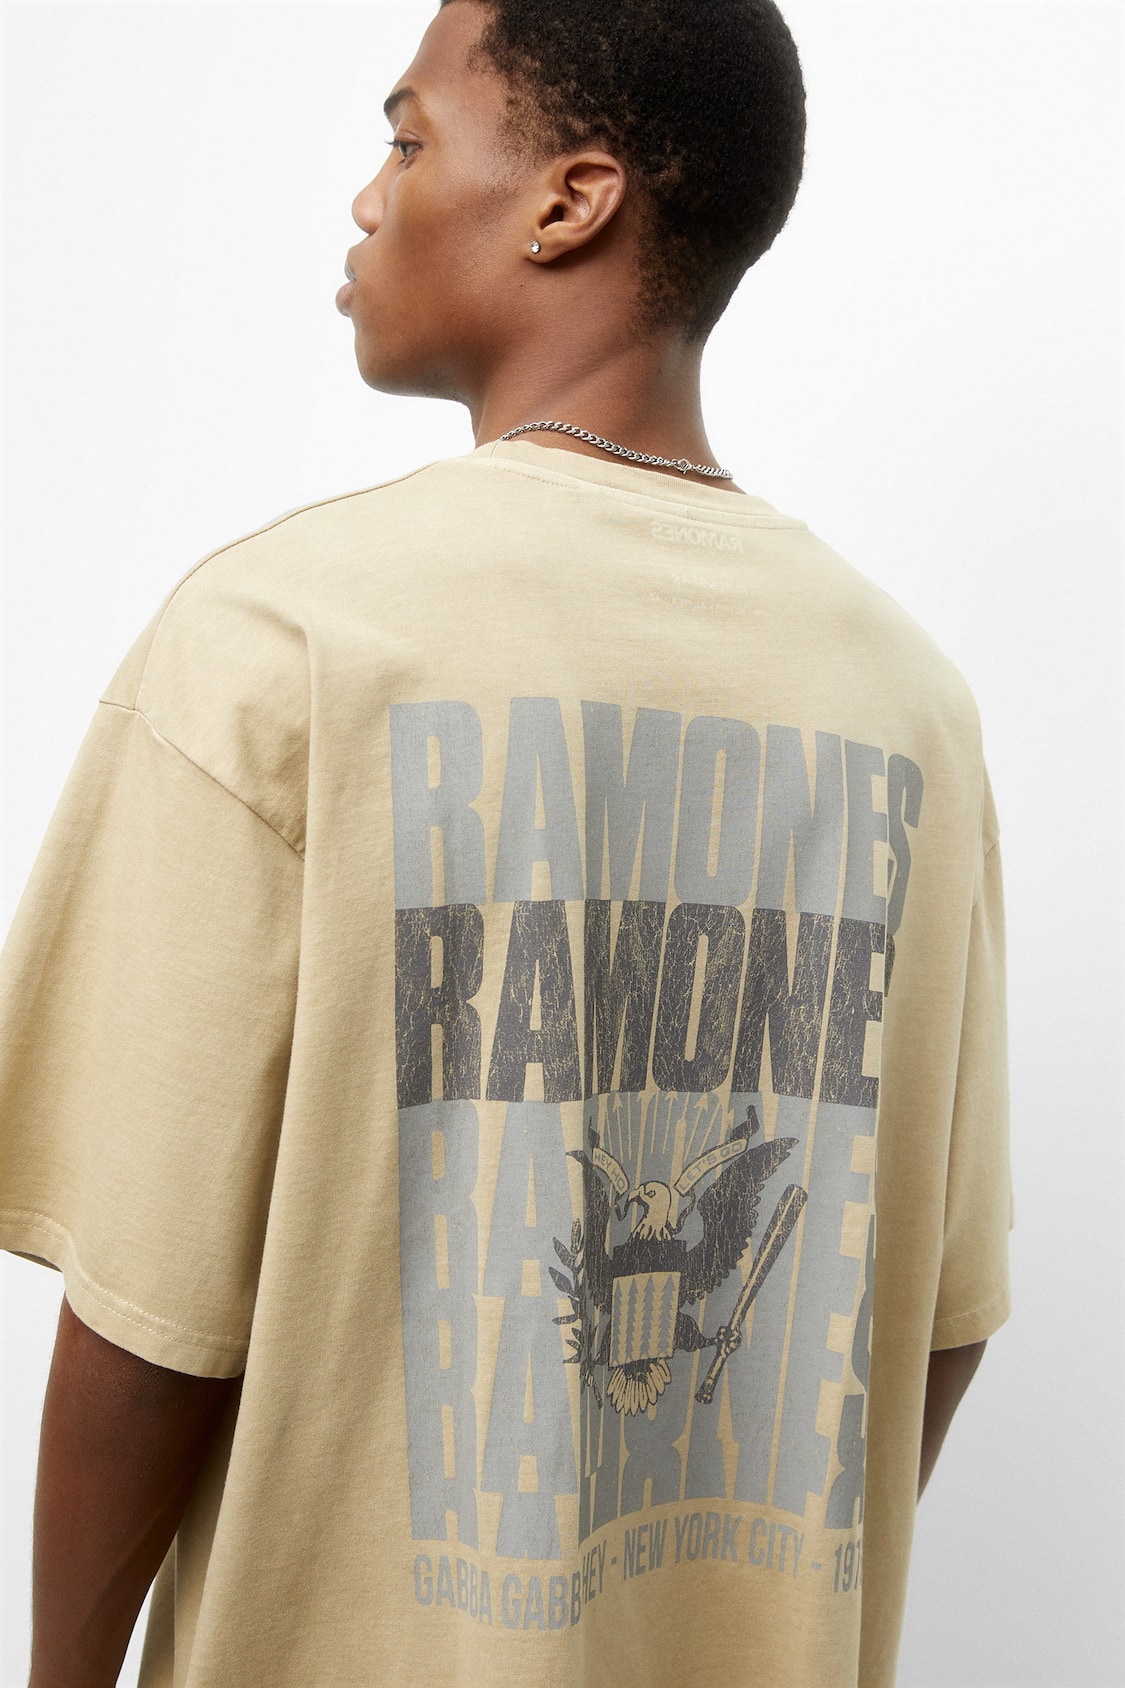 Garment Ramones T-shirt - PULL&BEAR